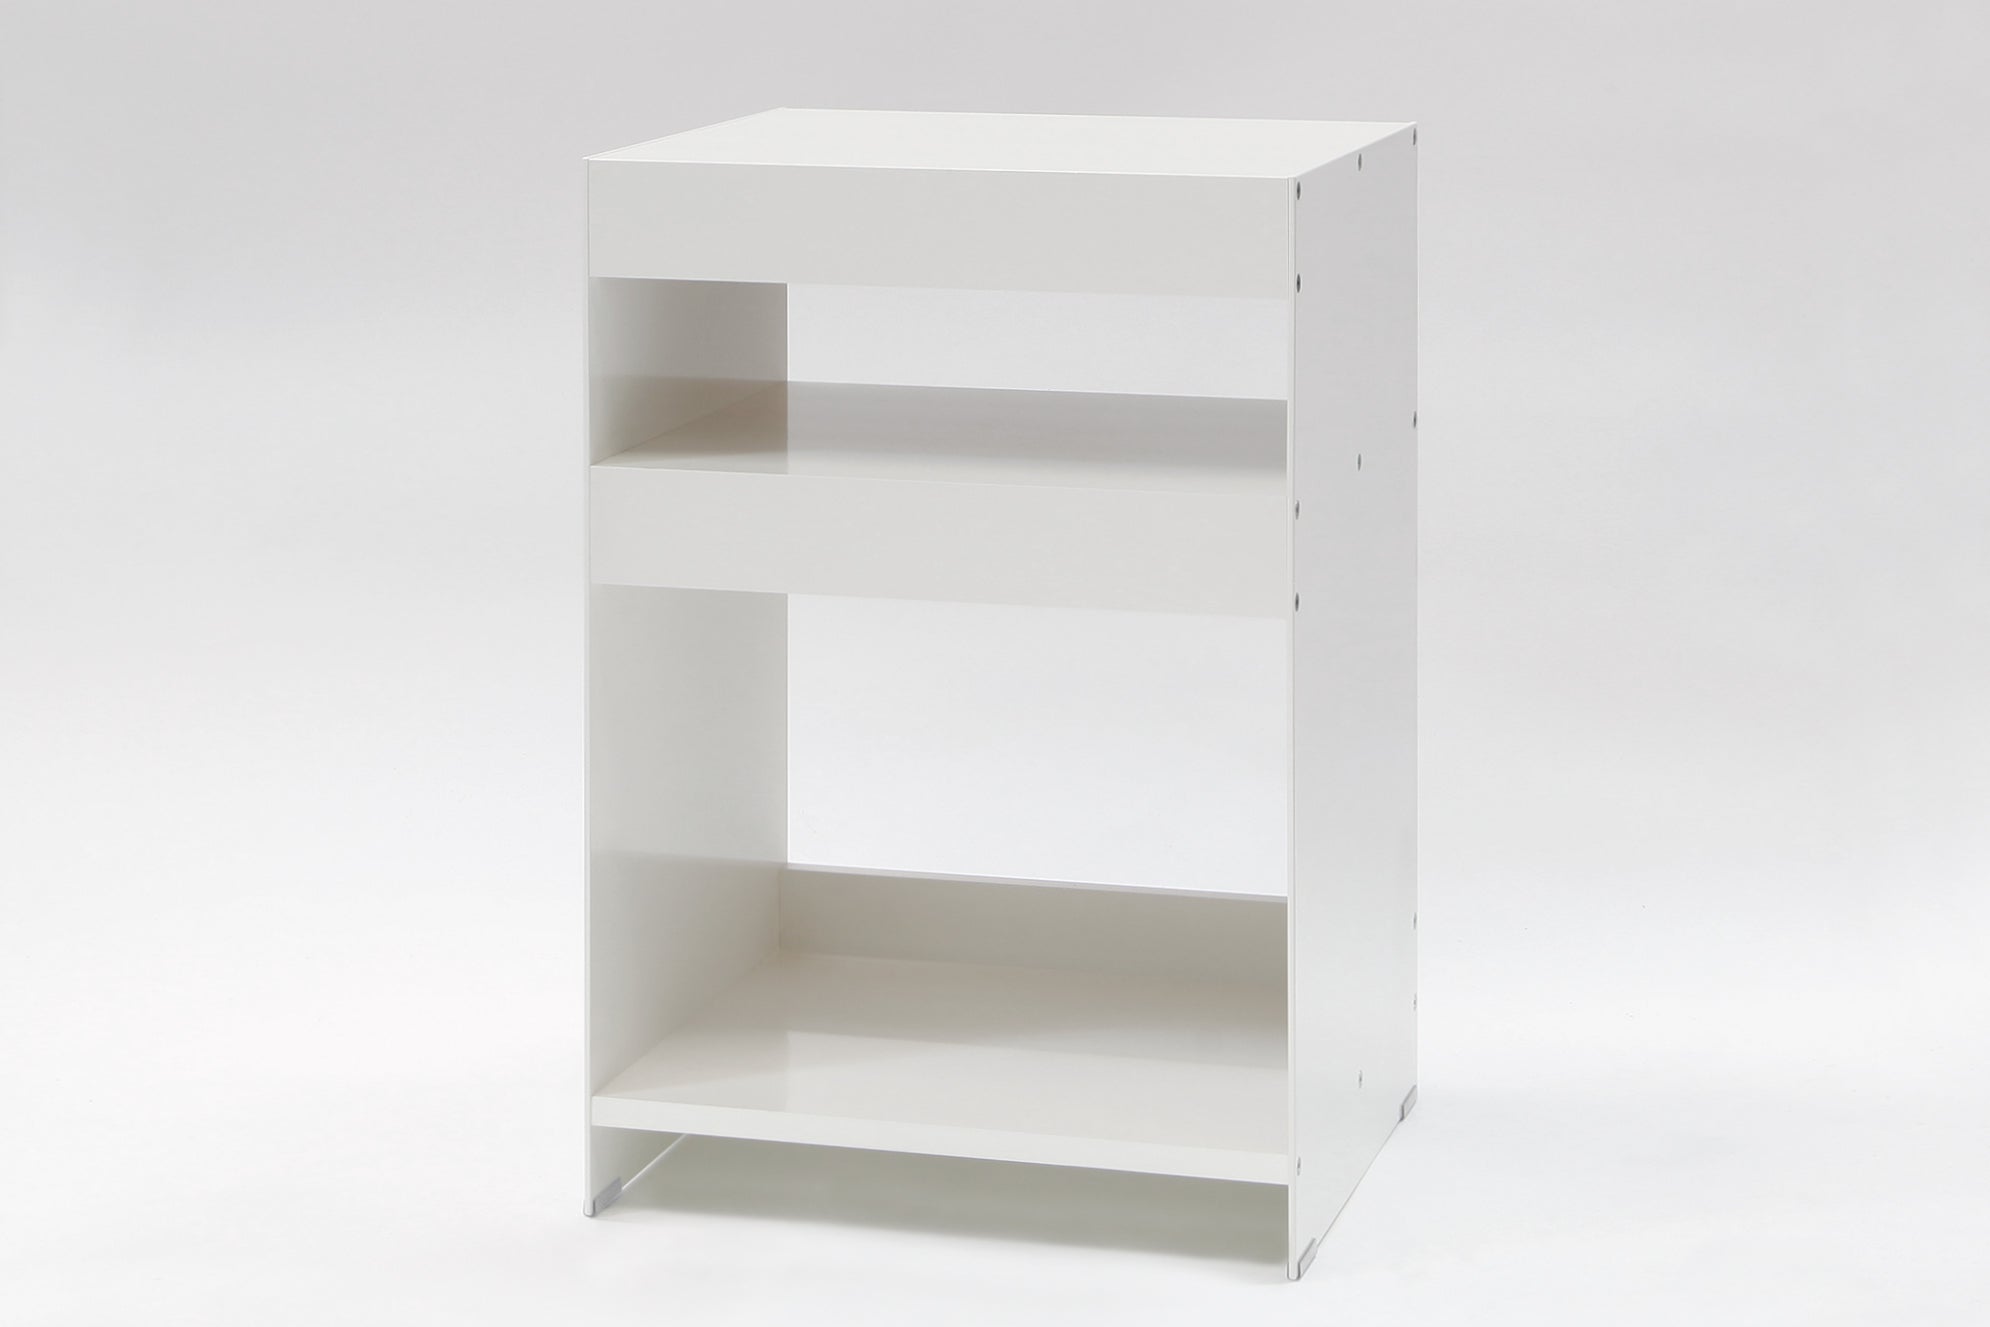 ON&ON H2 modern aluminium side table with white powder coated finish